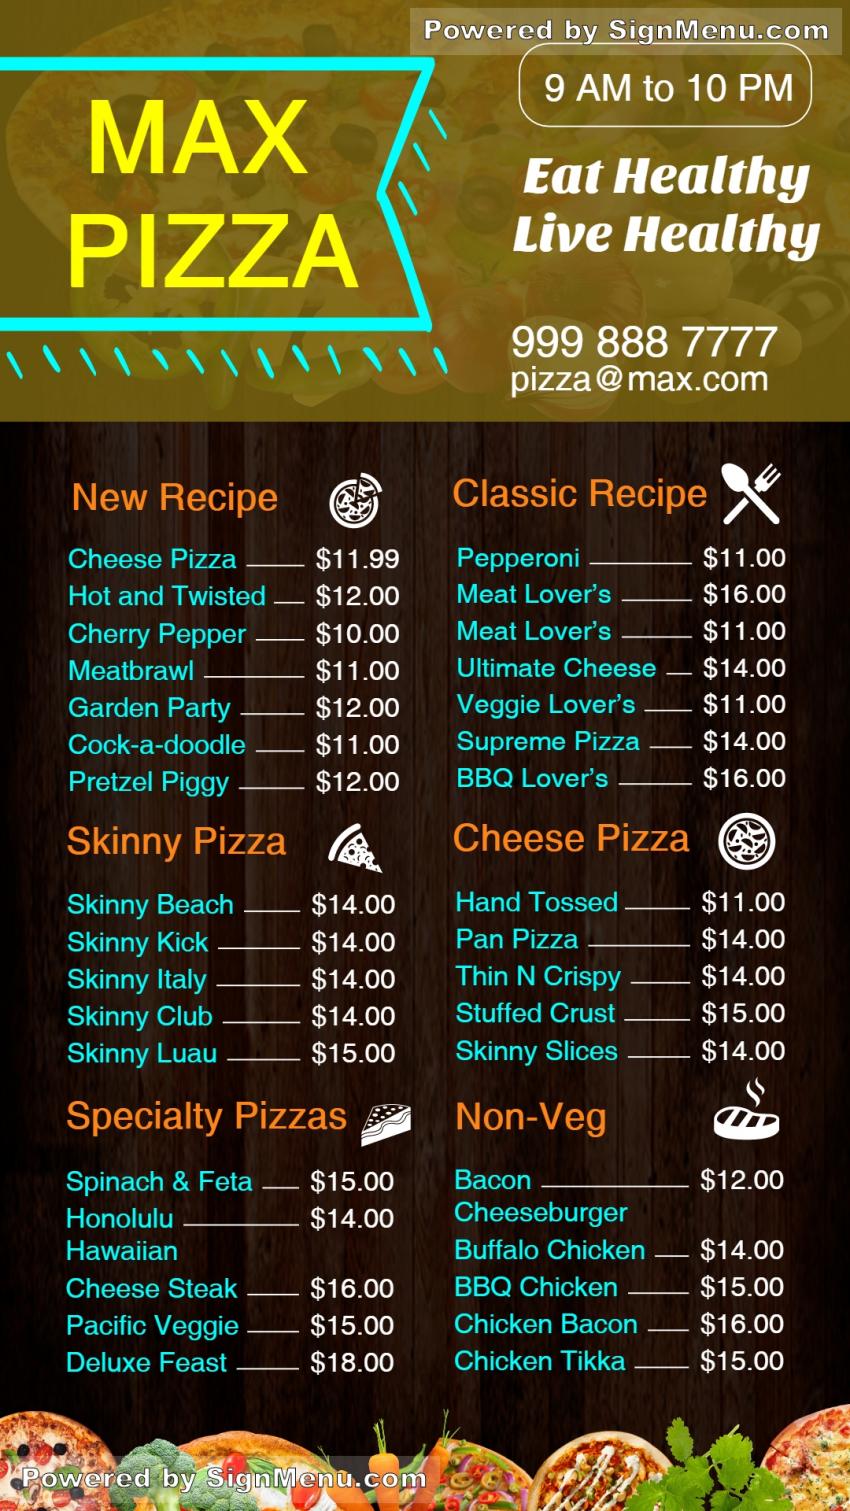 Digital menu board for Pizza shop